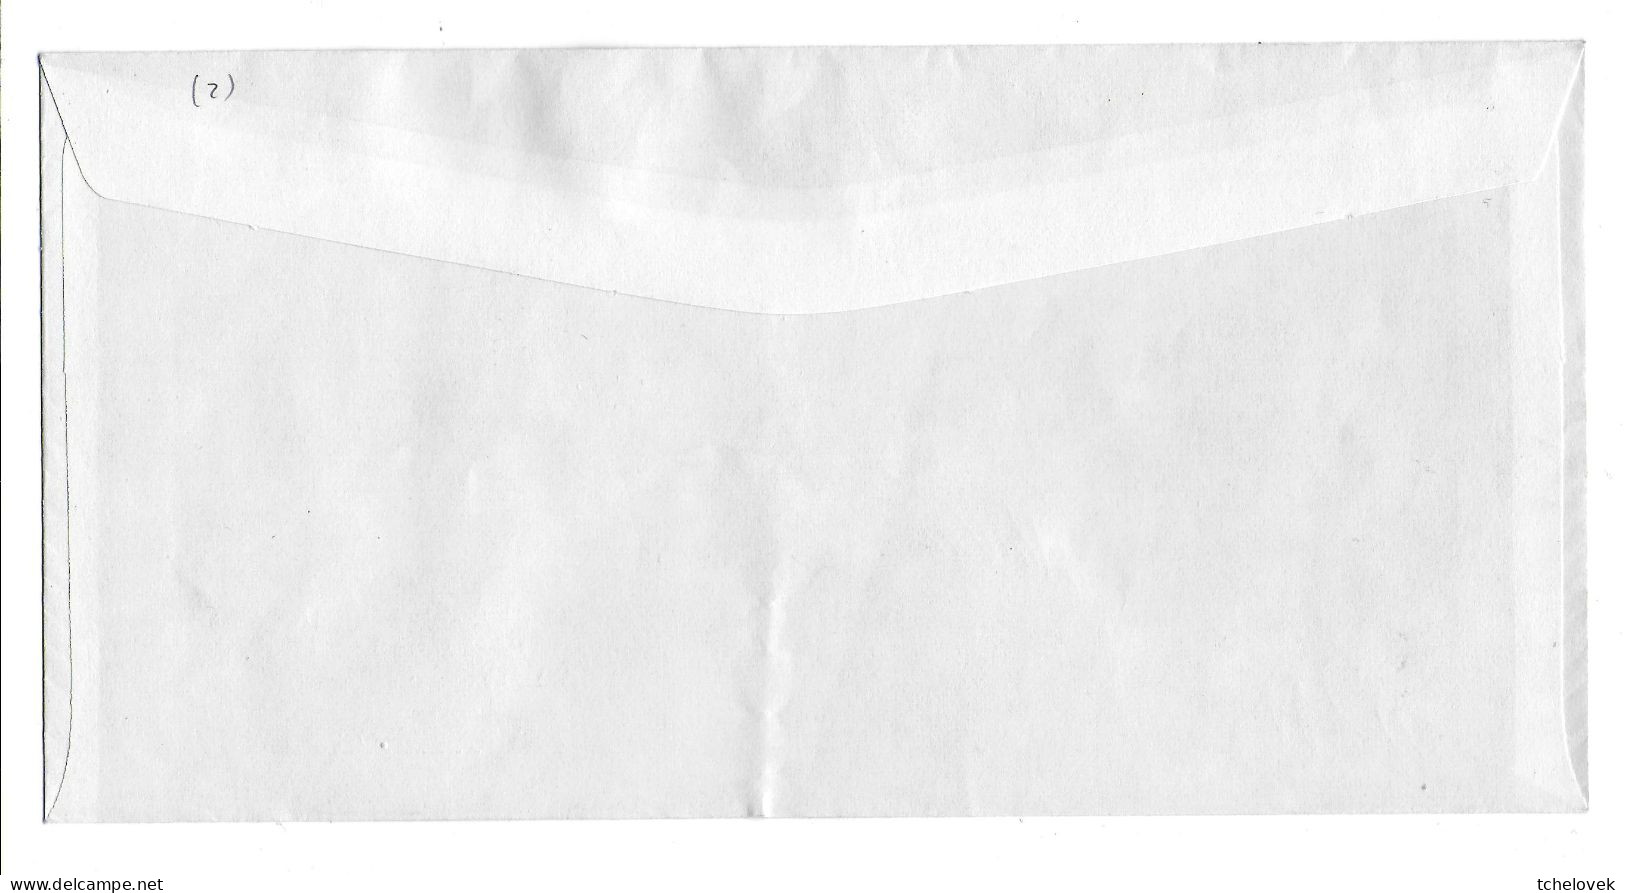 FSAT TAAF Cap Horn Sapmer 01.01.1979 SPA T. 0.40 Algues + 1.00 Nodules - Lettres & Documents